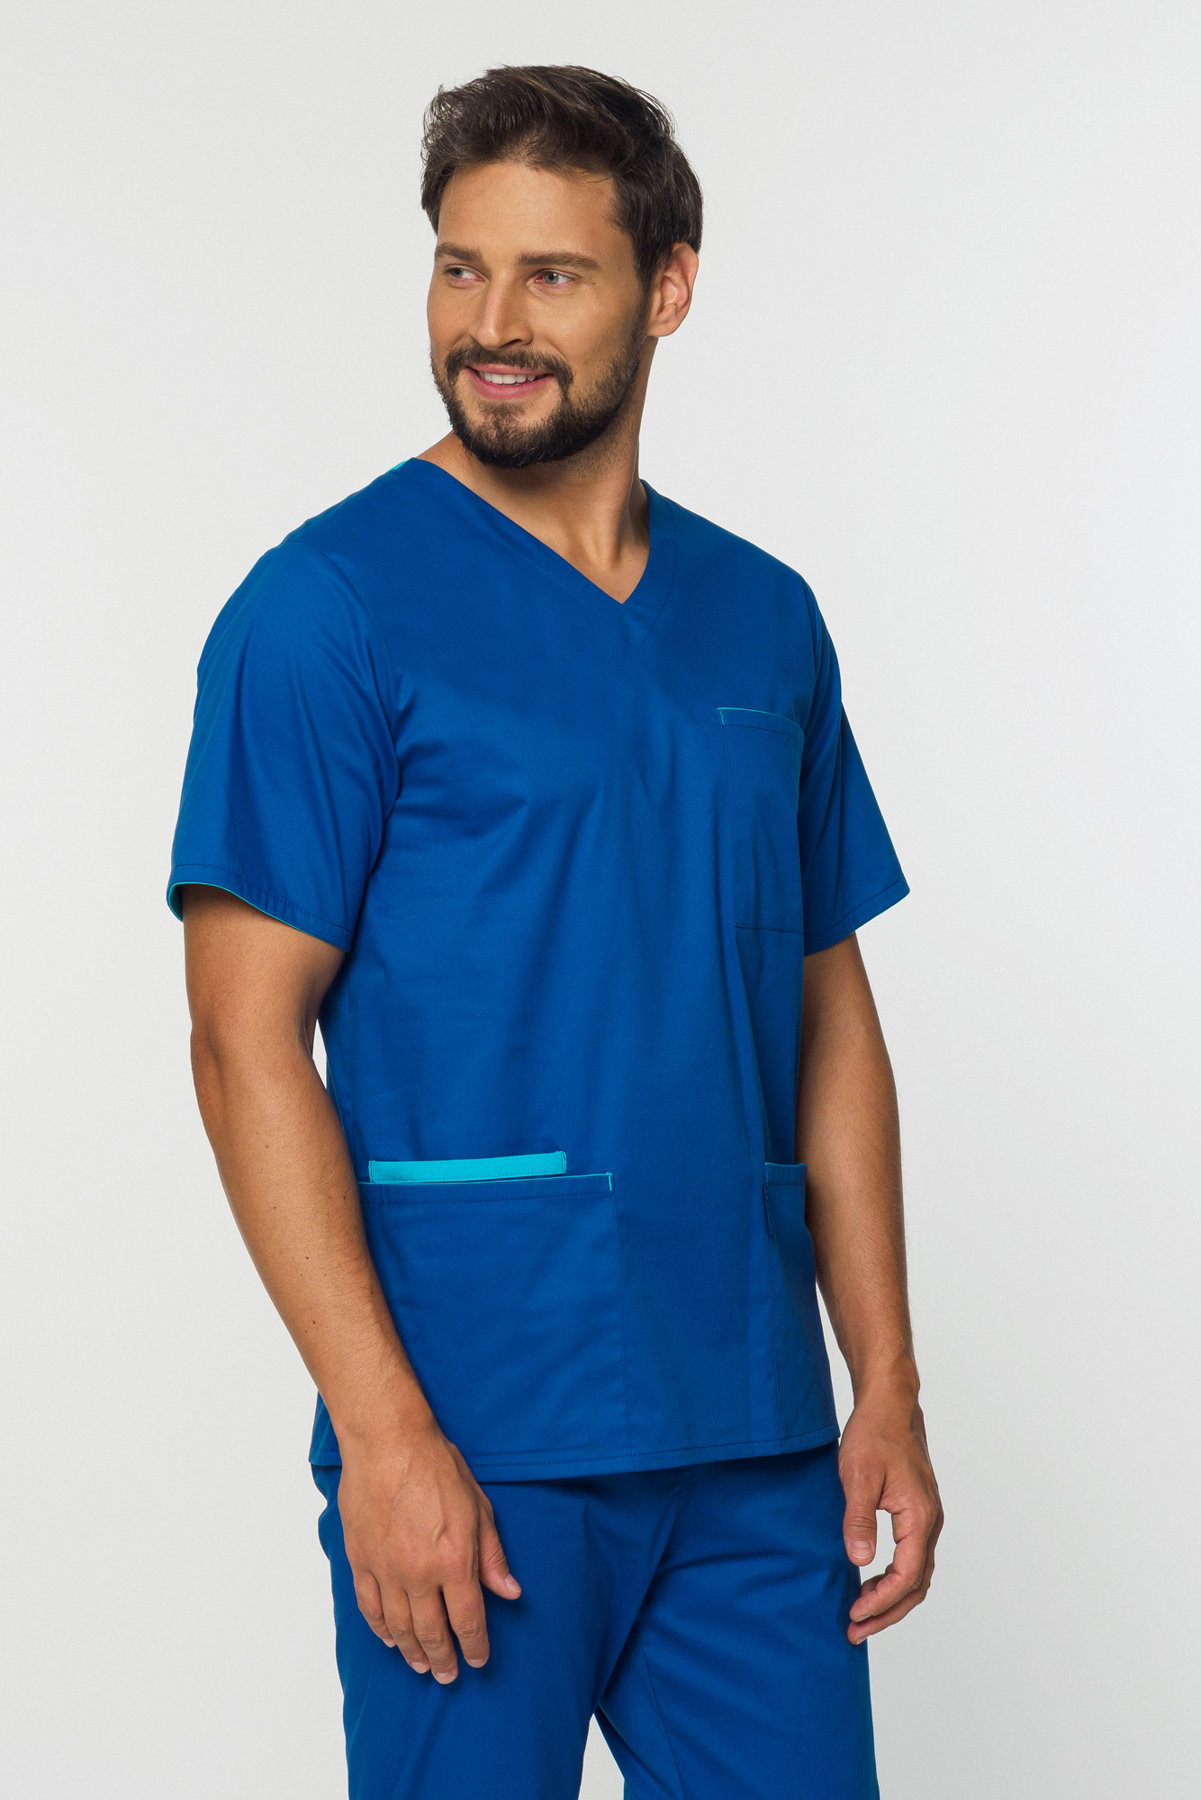 Men's scrubs top MB2-G, navy blue Niebieski | Men's medical clothing ...